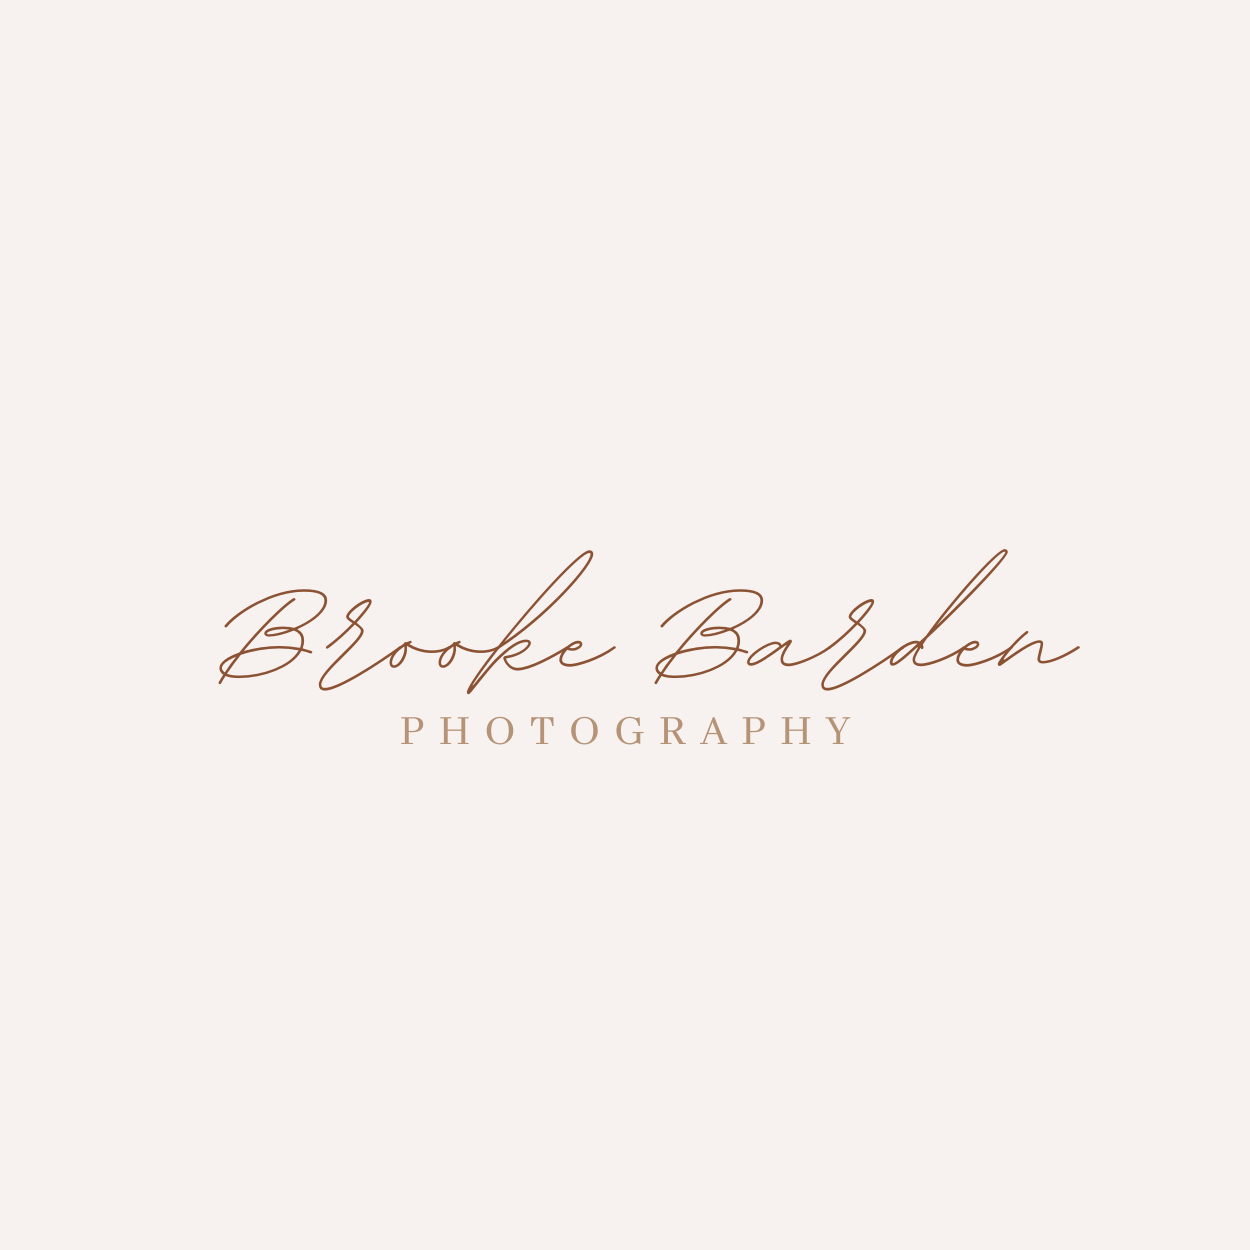 Brooke Barden Photography's logo